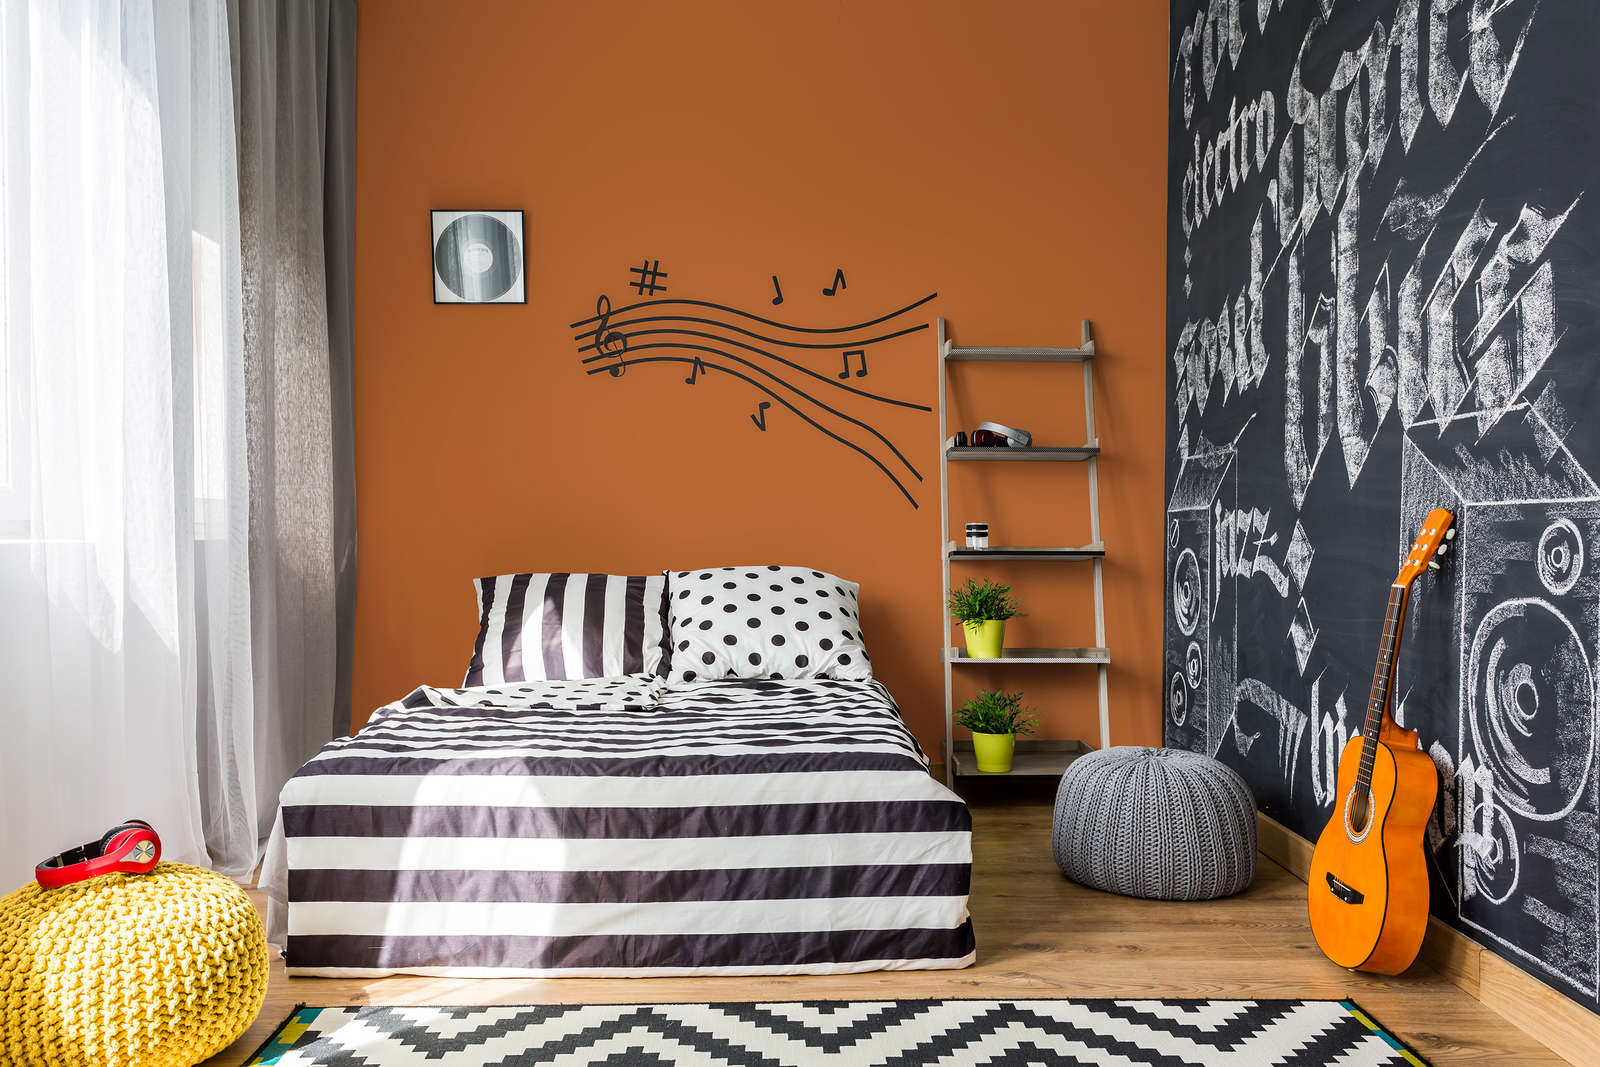             Premium Wall Paint Warm Orange »Pretty Peach« NW903 – 1 litre
        